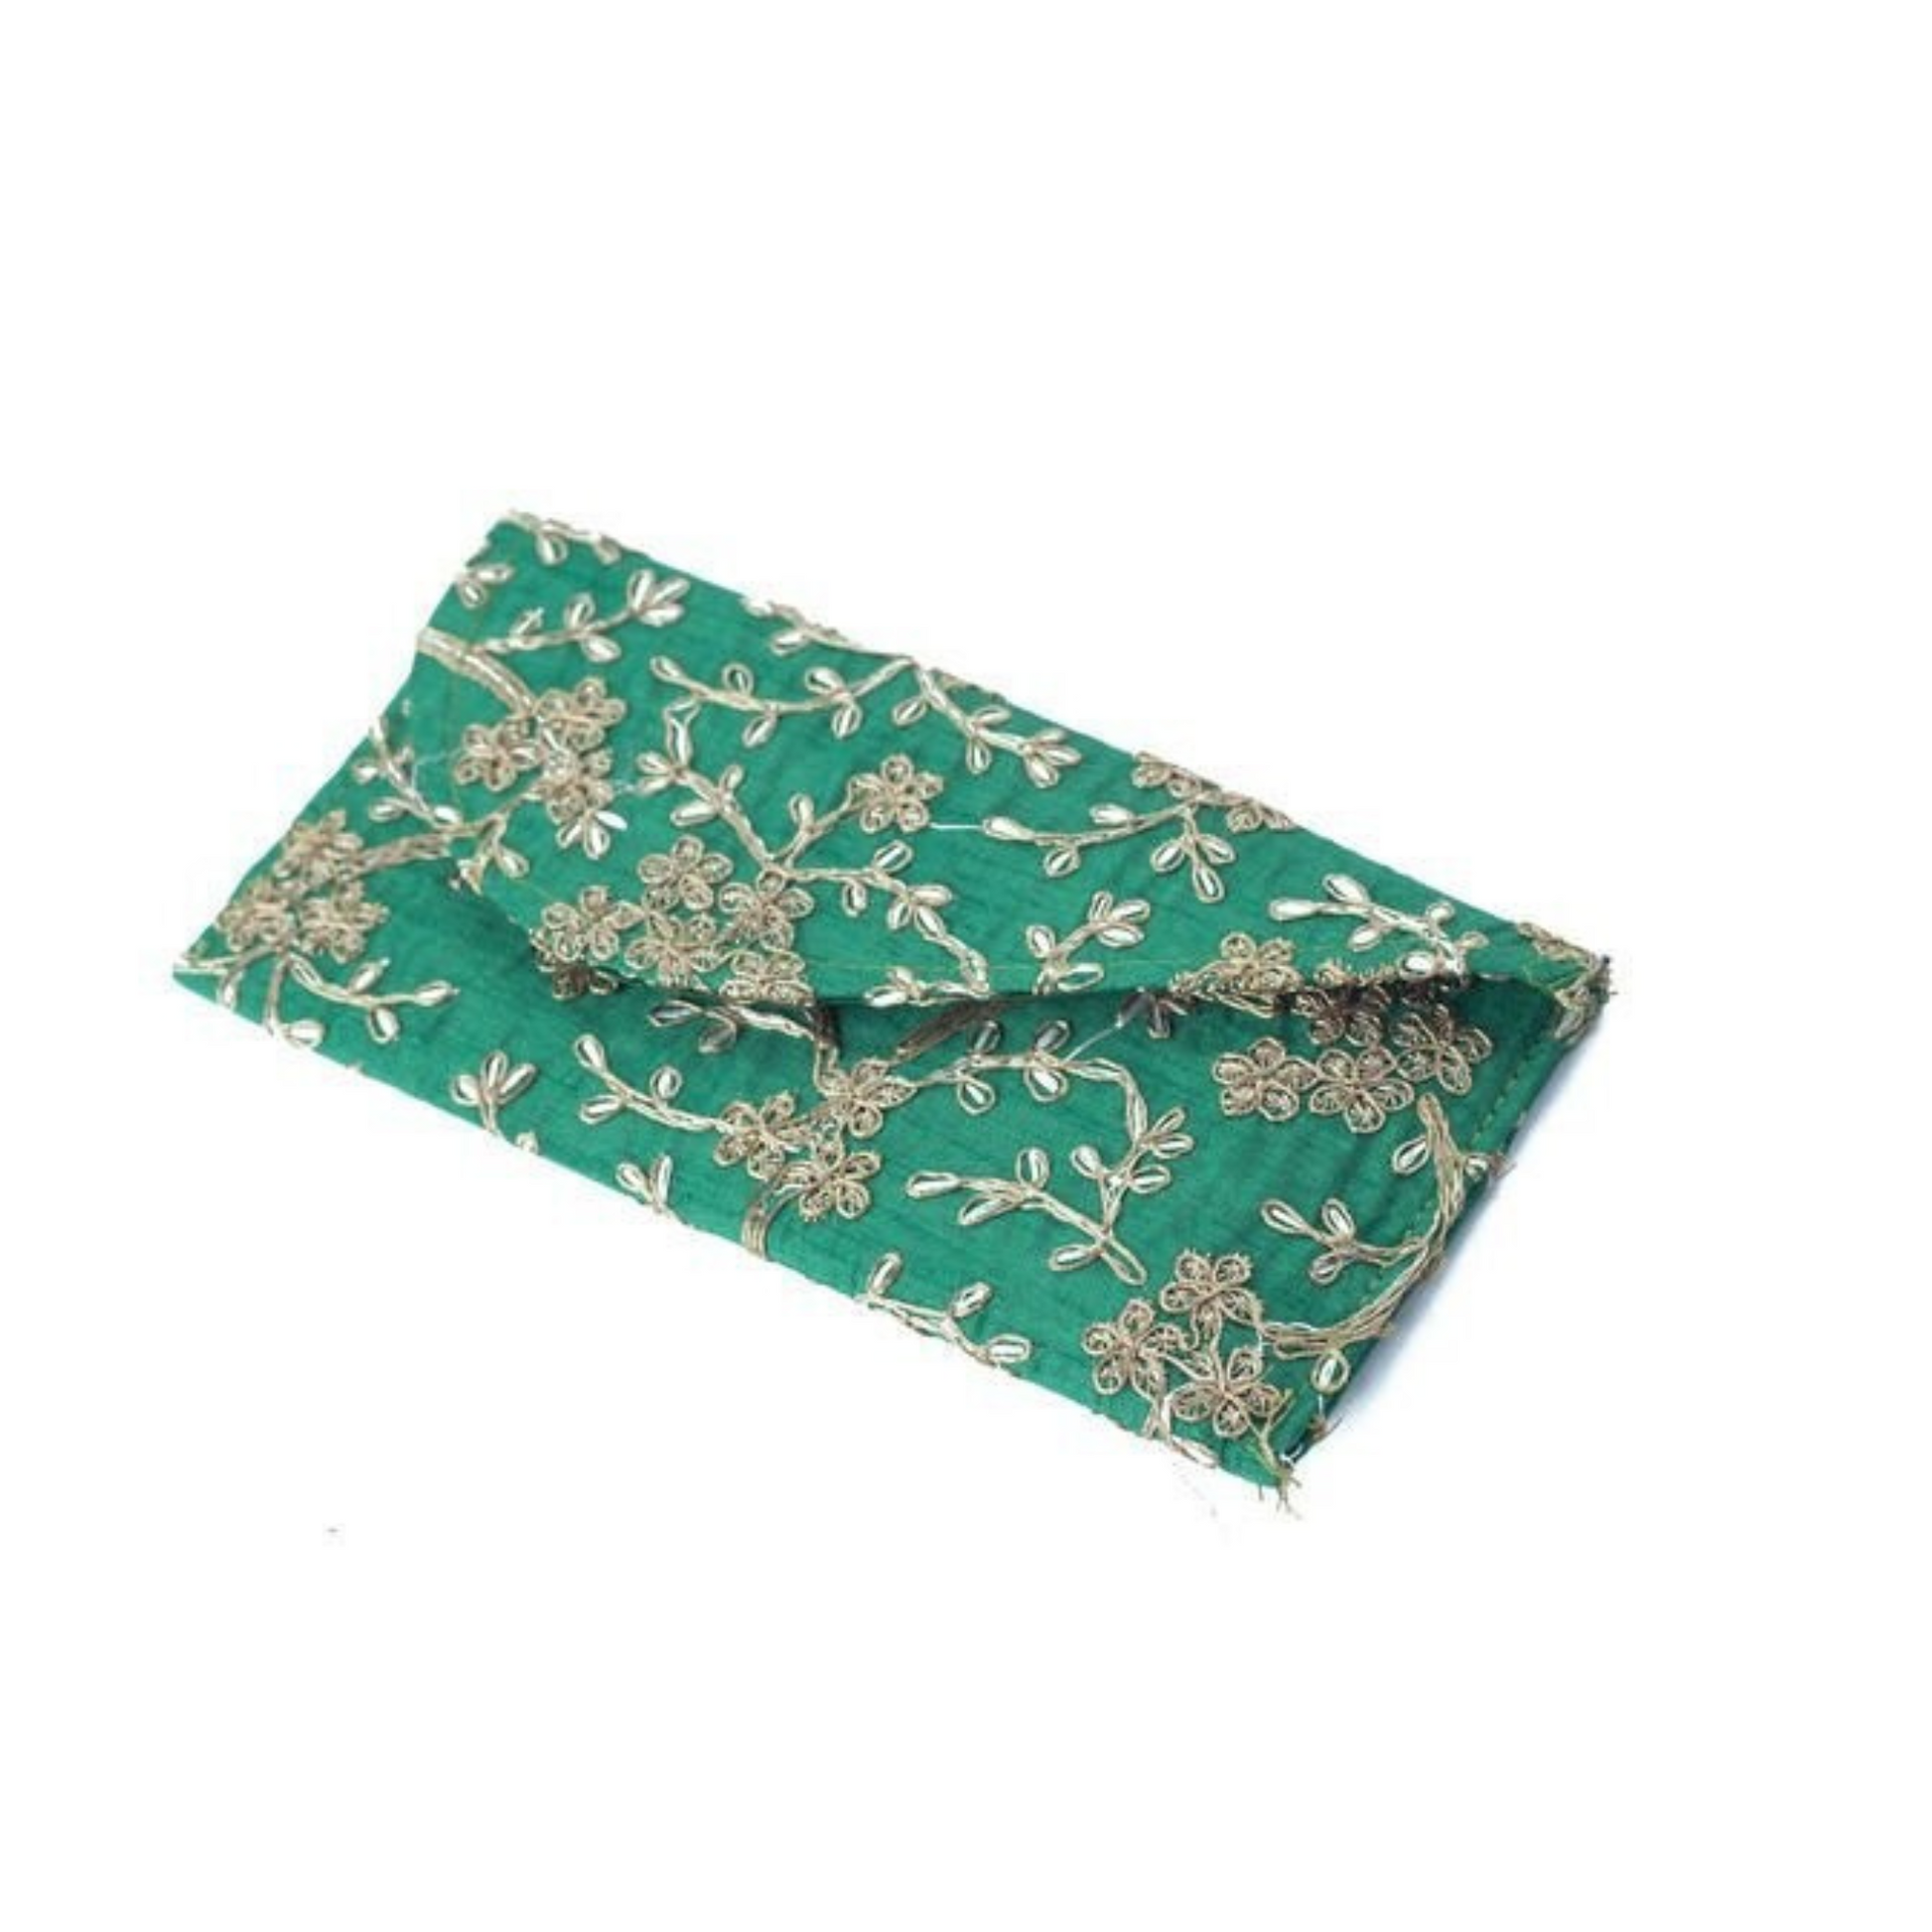 green embroidery shugun india money envelopes